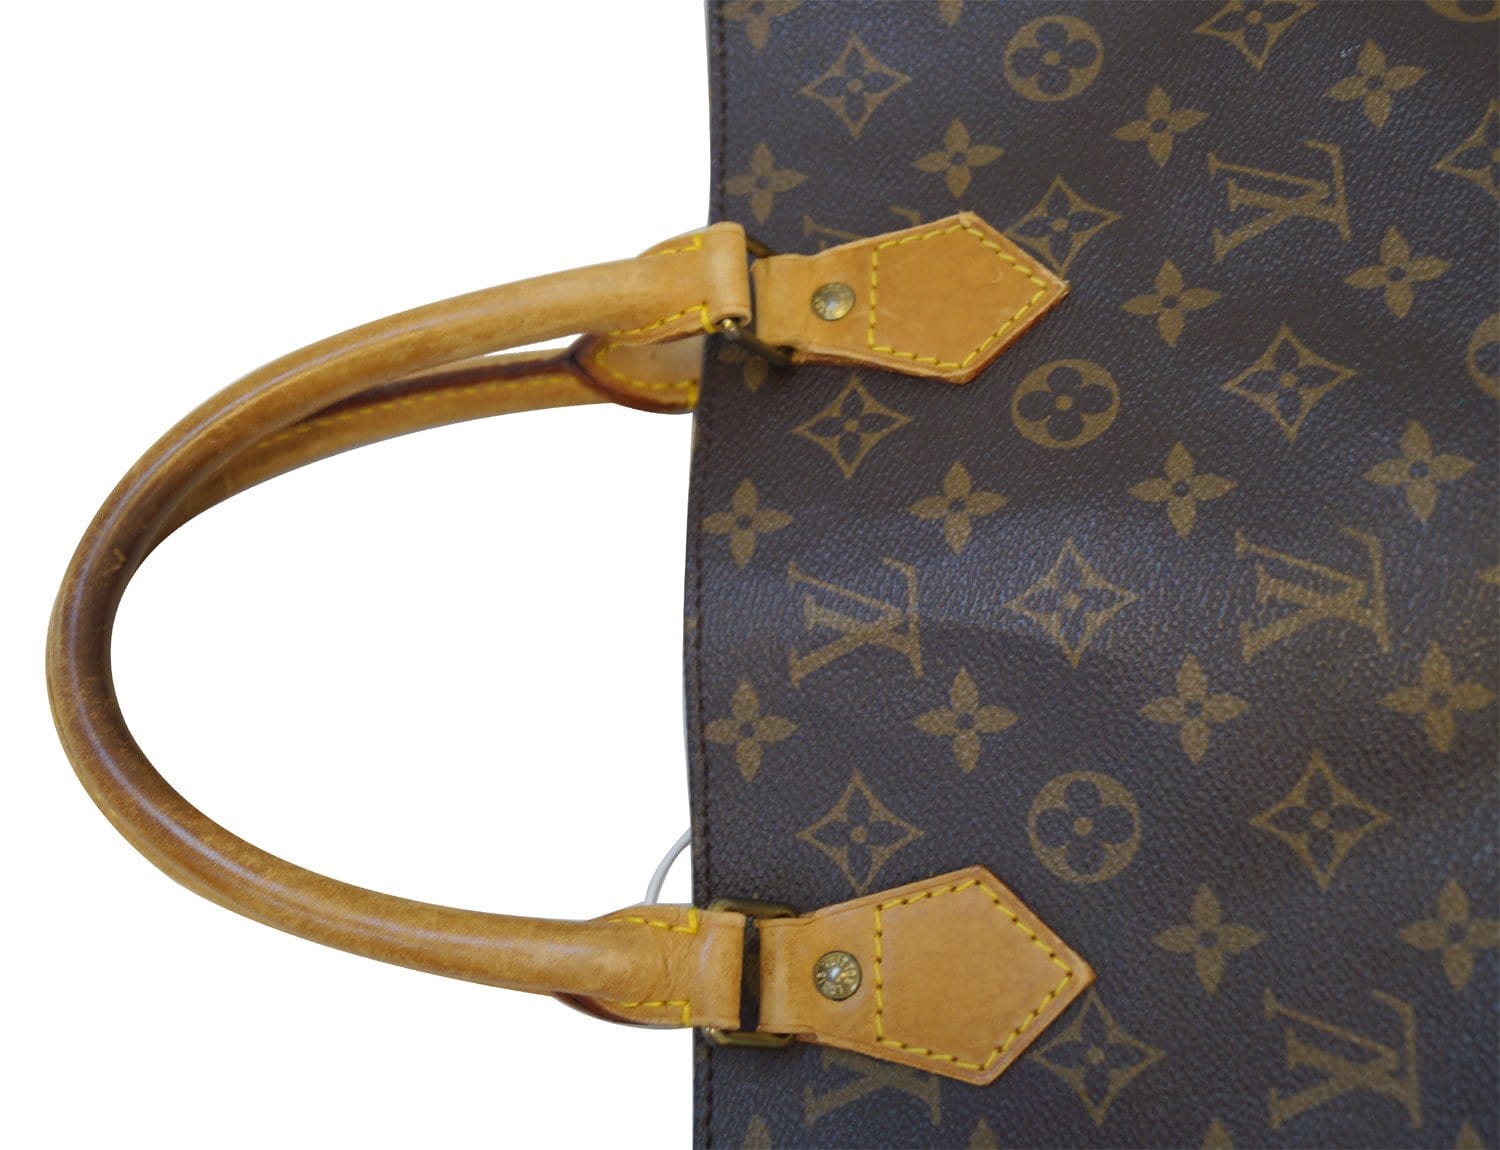 Louis Vuitton Sac Plat 24H Tote Bag - Vitkac shop online